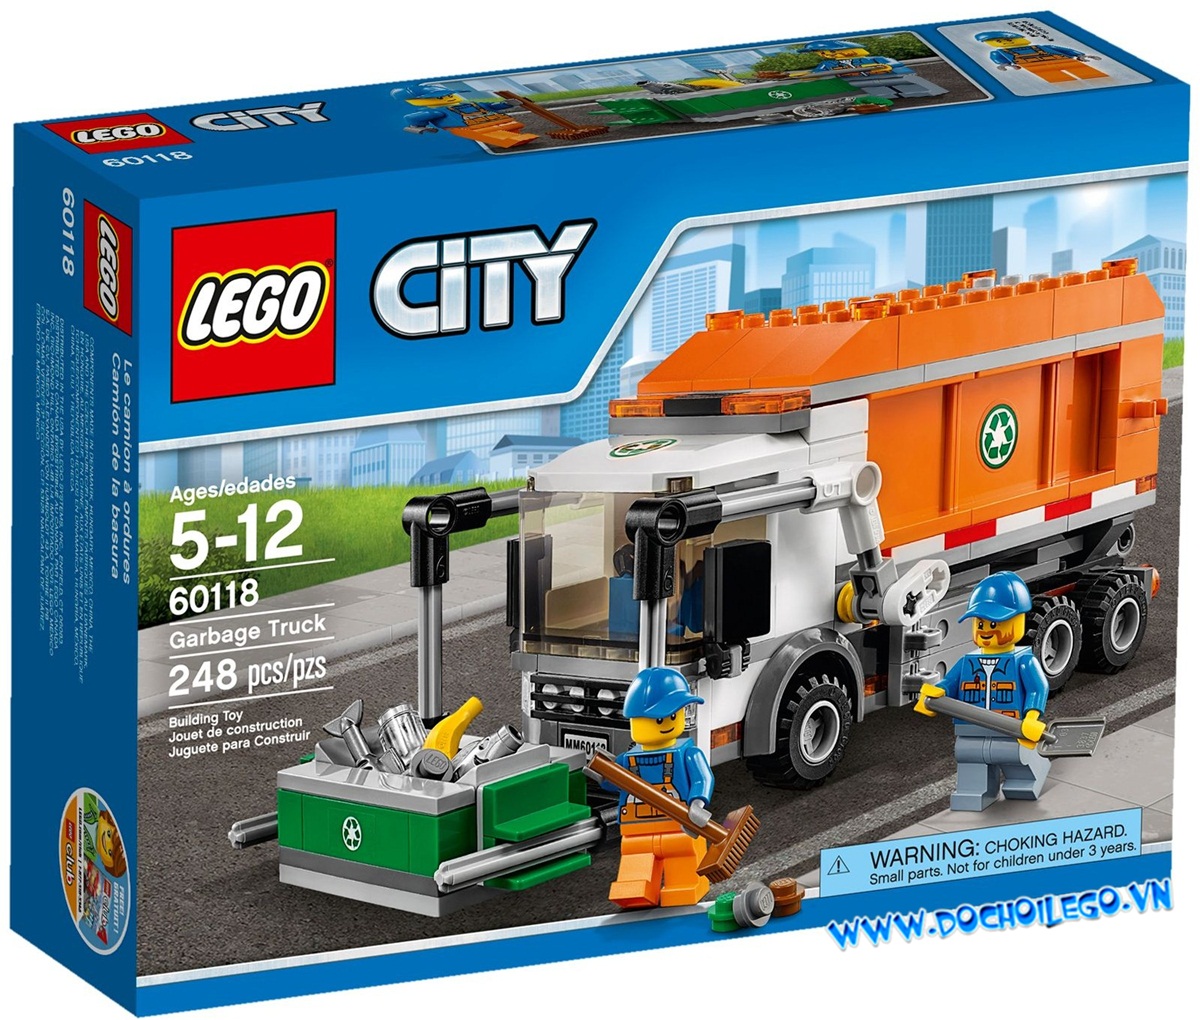 60118 LEGO City Garbage Truck